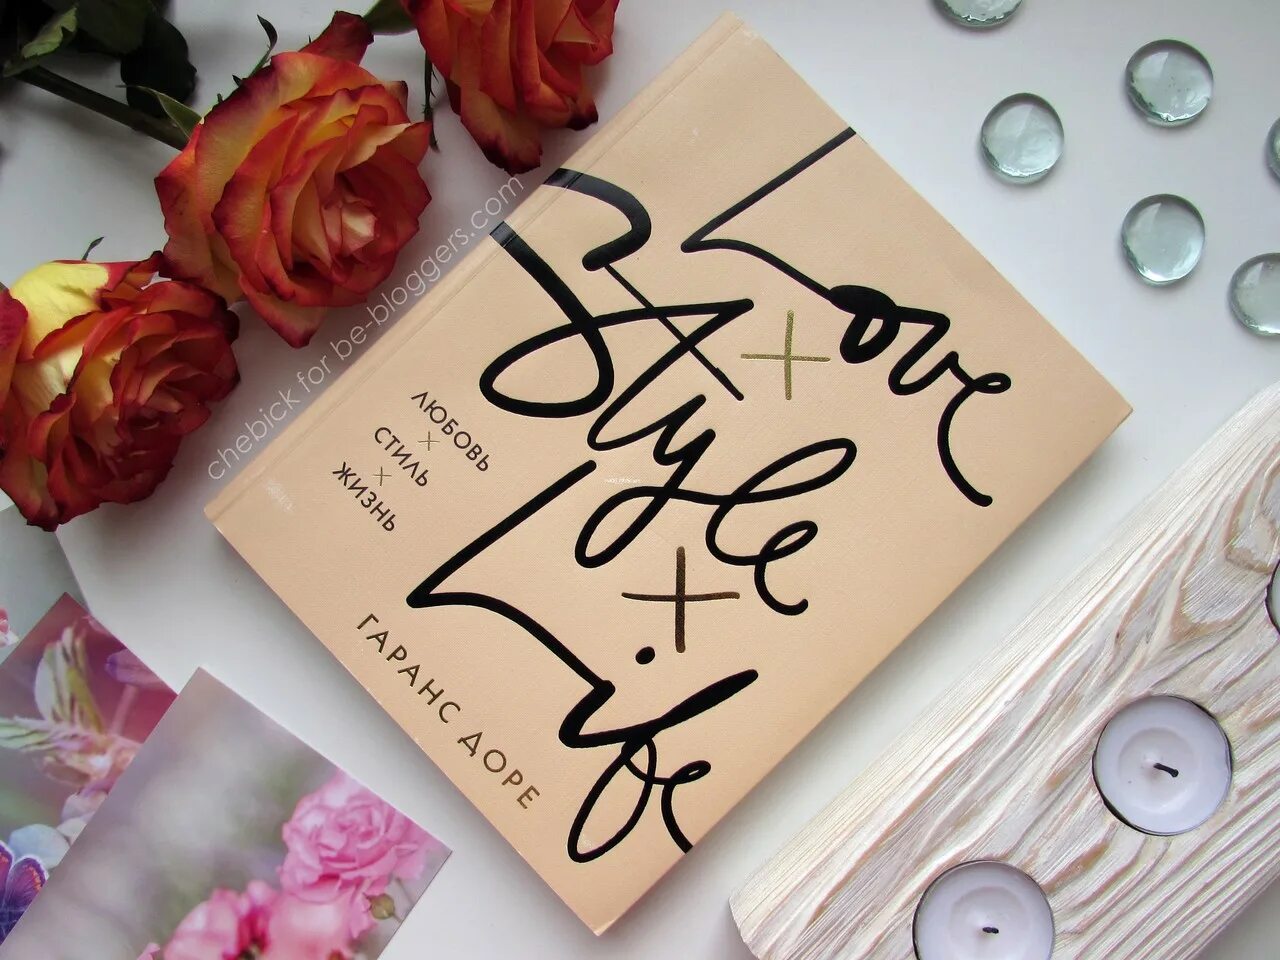 Гаранс Дорэ. «Любовь. Стиль. Жизнь». Гаранс Доре любовь стиль жизнь. Love Style Life книга. Love стиль. Life is style